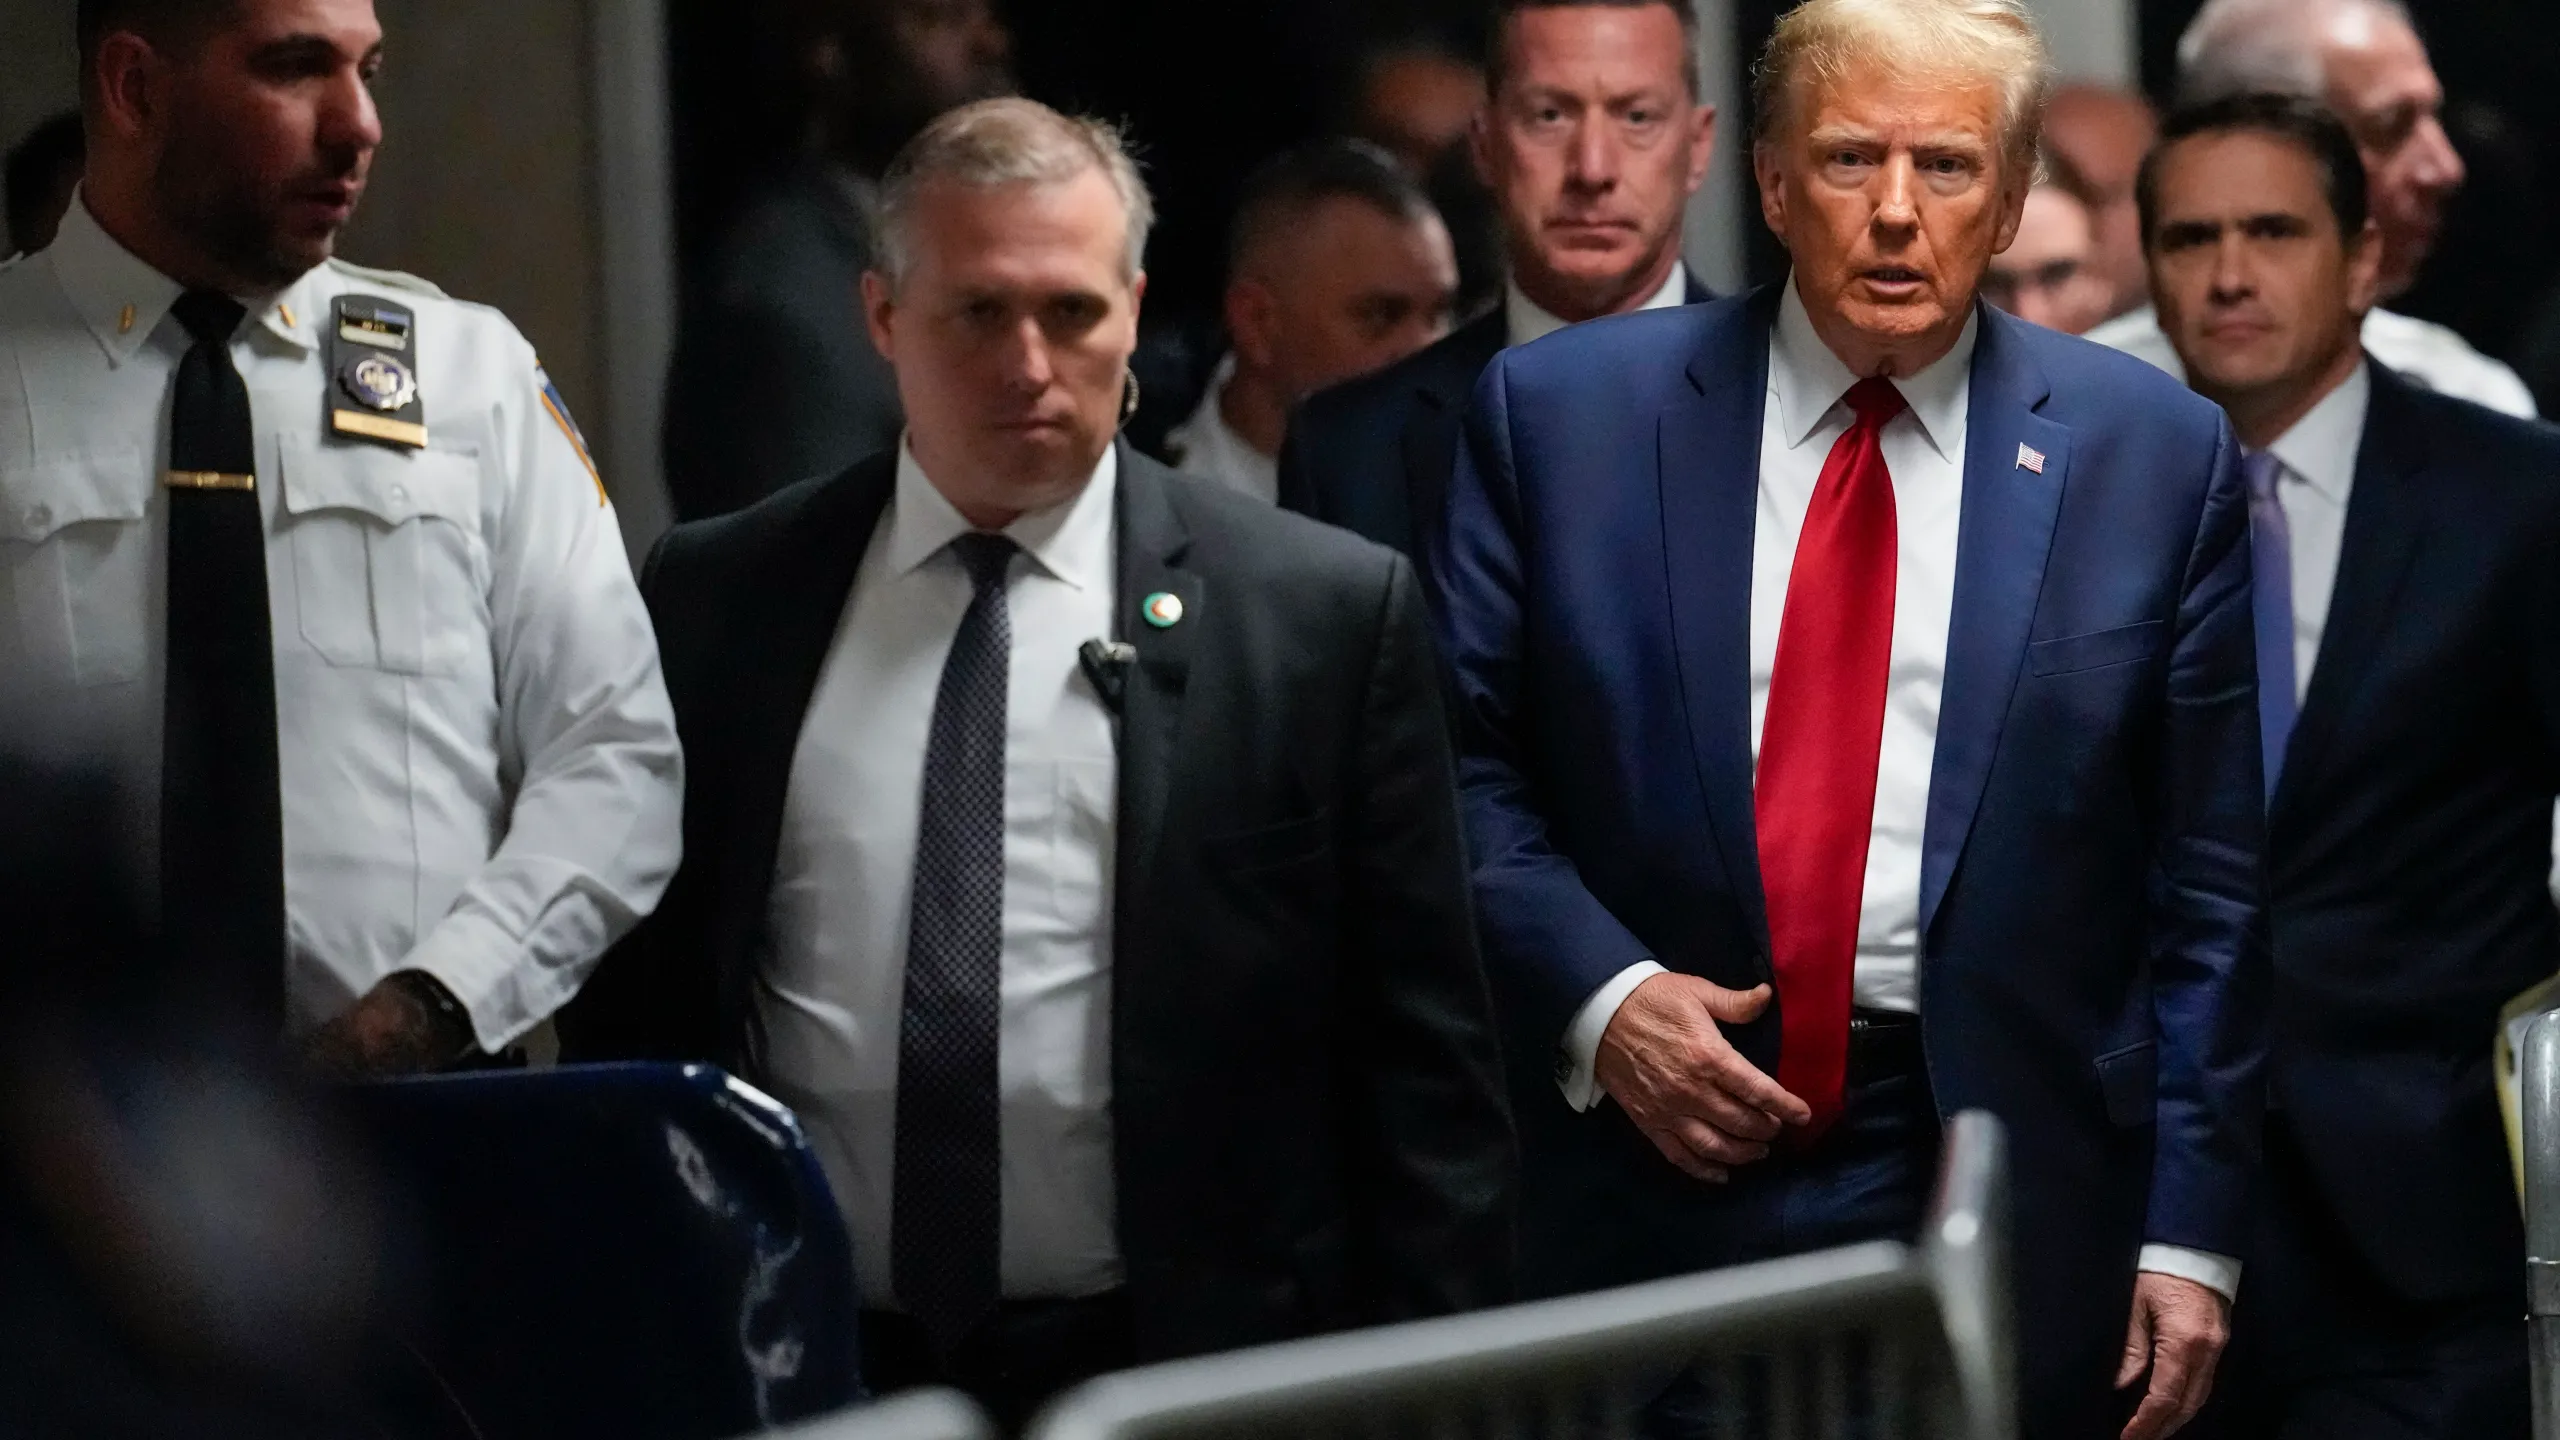 Prosecutors refute Trump's claims, labeling them wild and untrue (Credits: AP Photo)